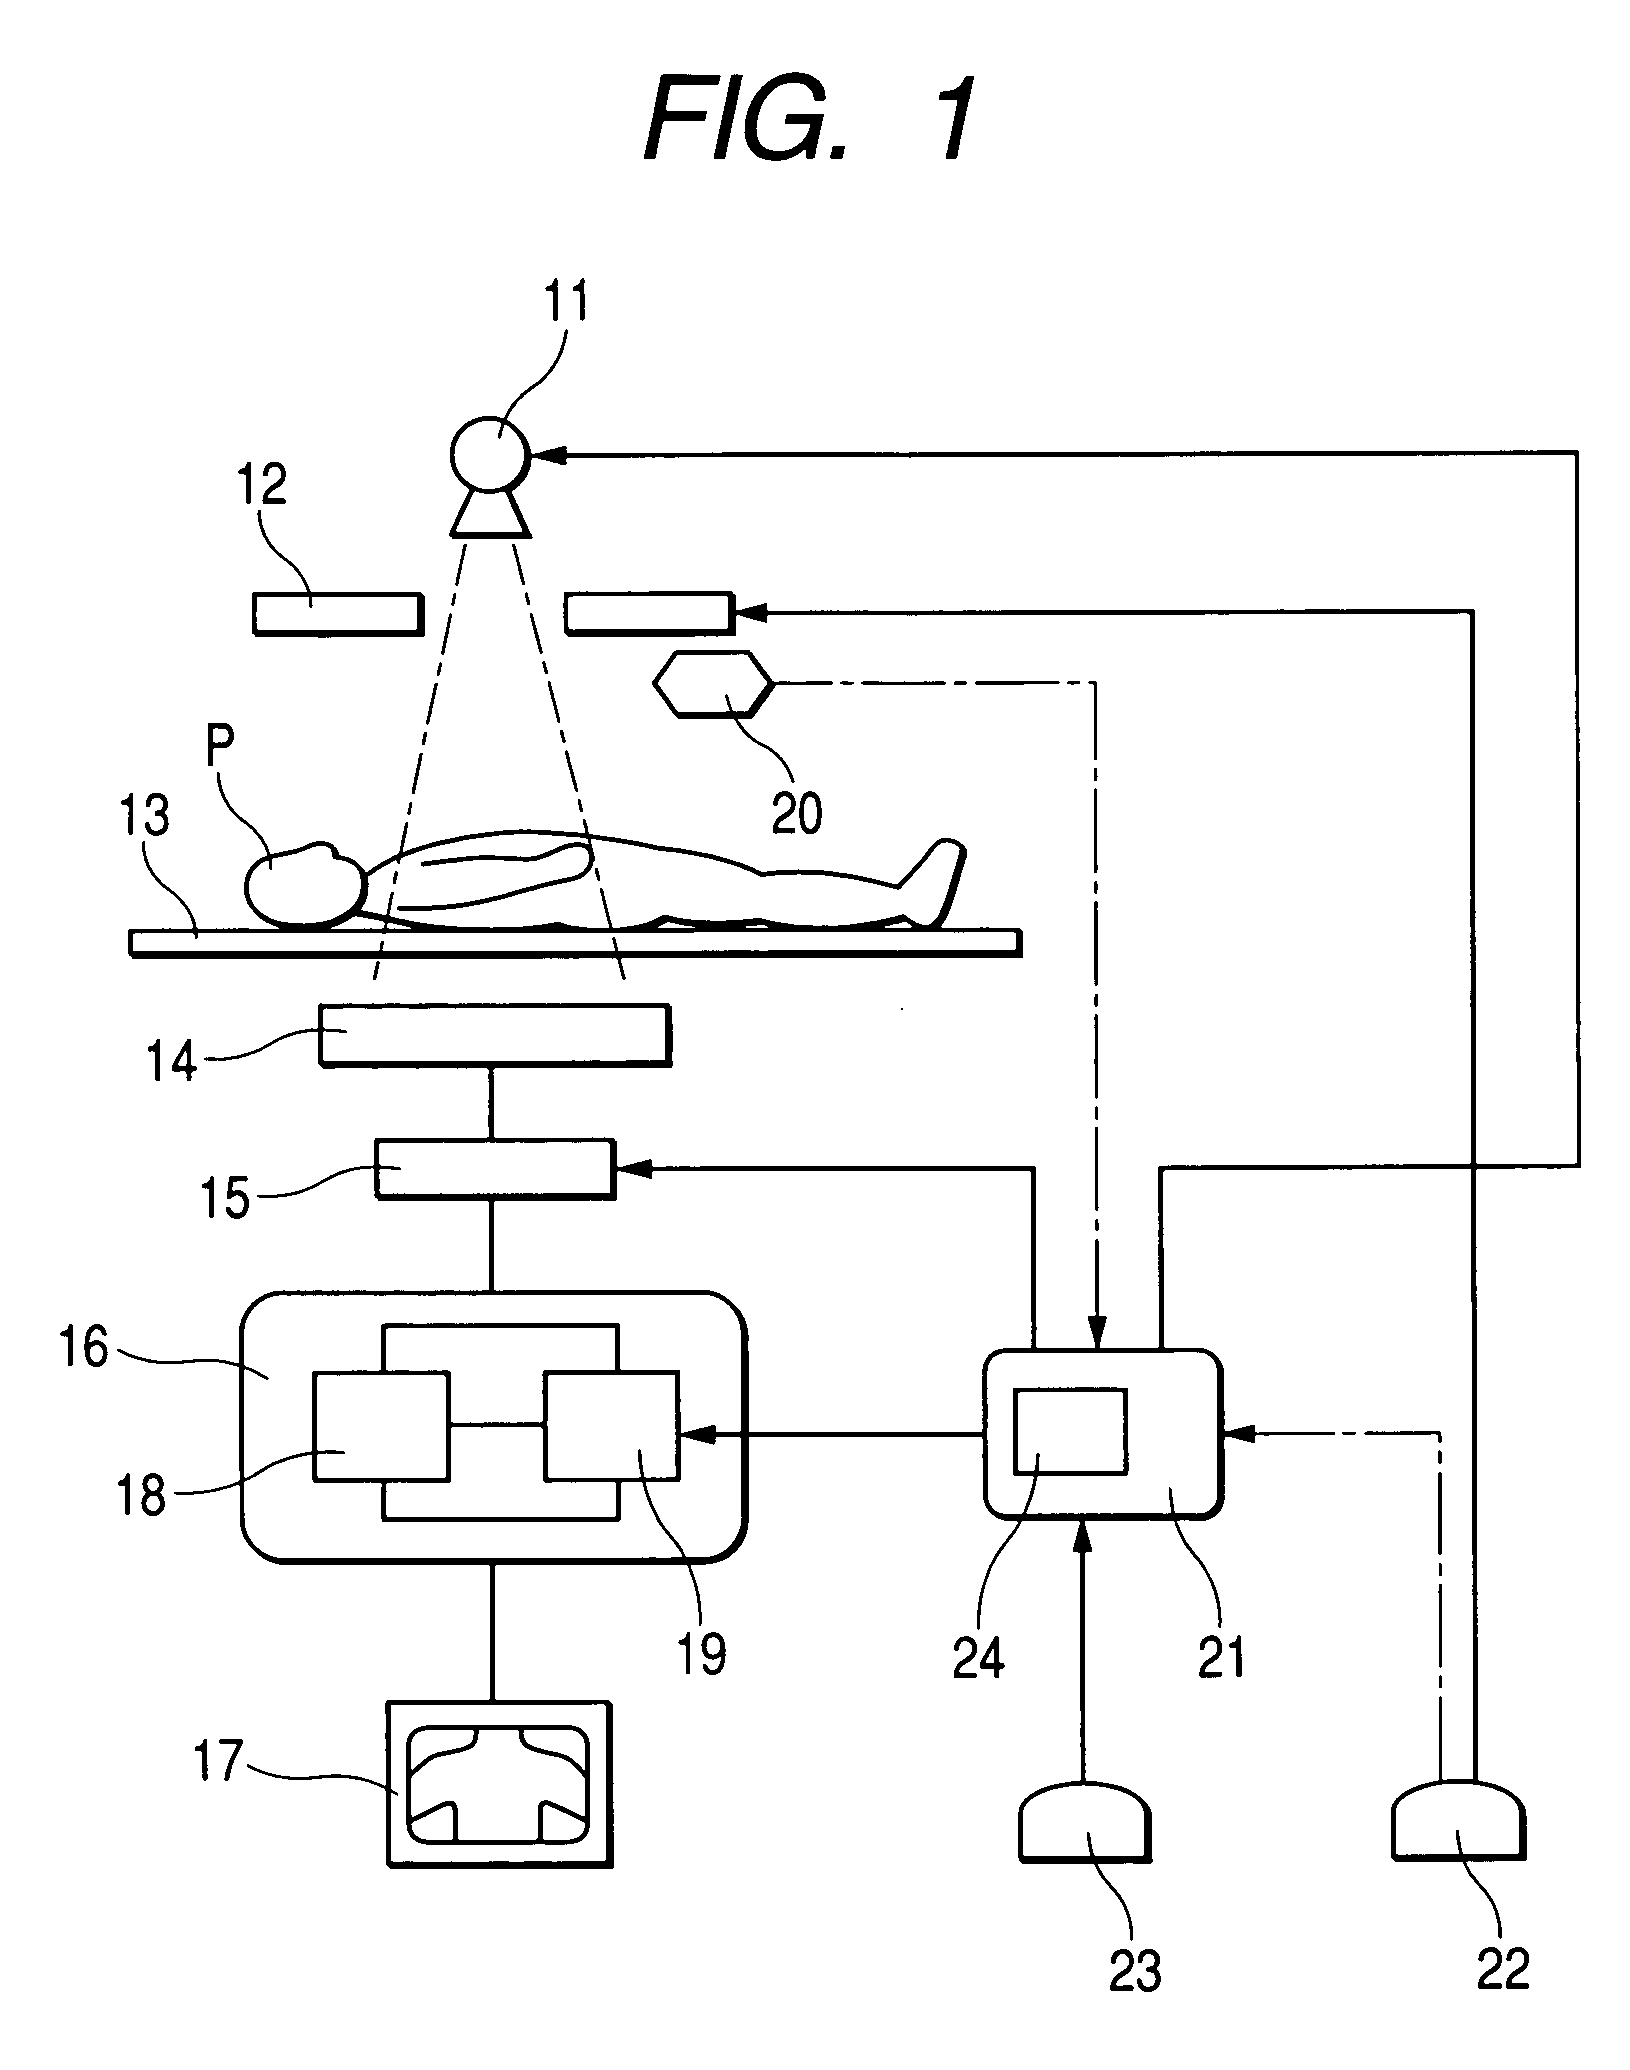 Fluoroscopic apparatus and method